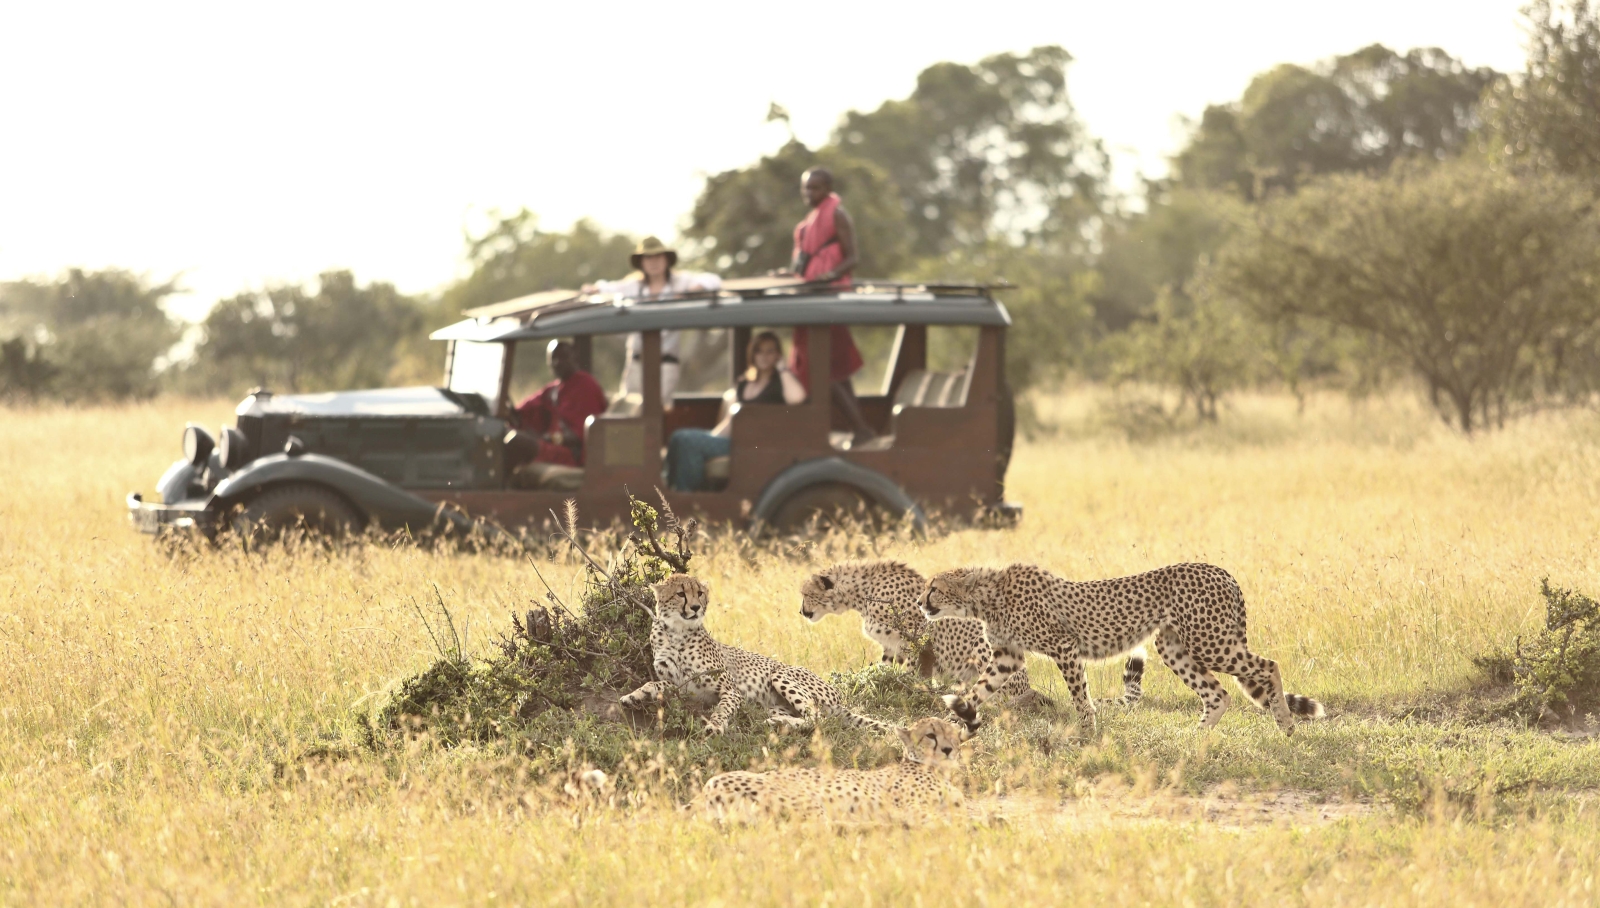 Spotting two cheetahs while on safari in the Maasai Mara while staying at luxury safari lodge Cottar's 1920's Safari Camp 